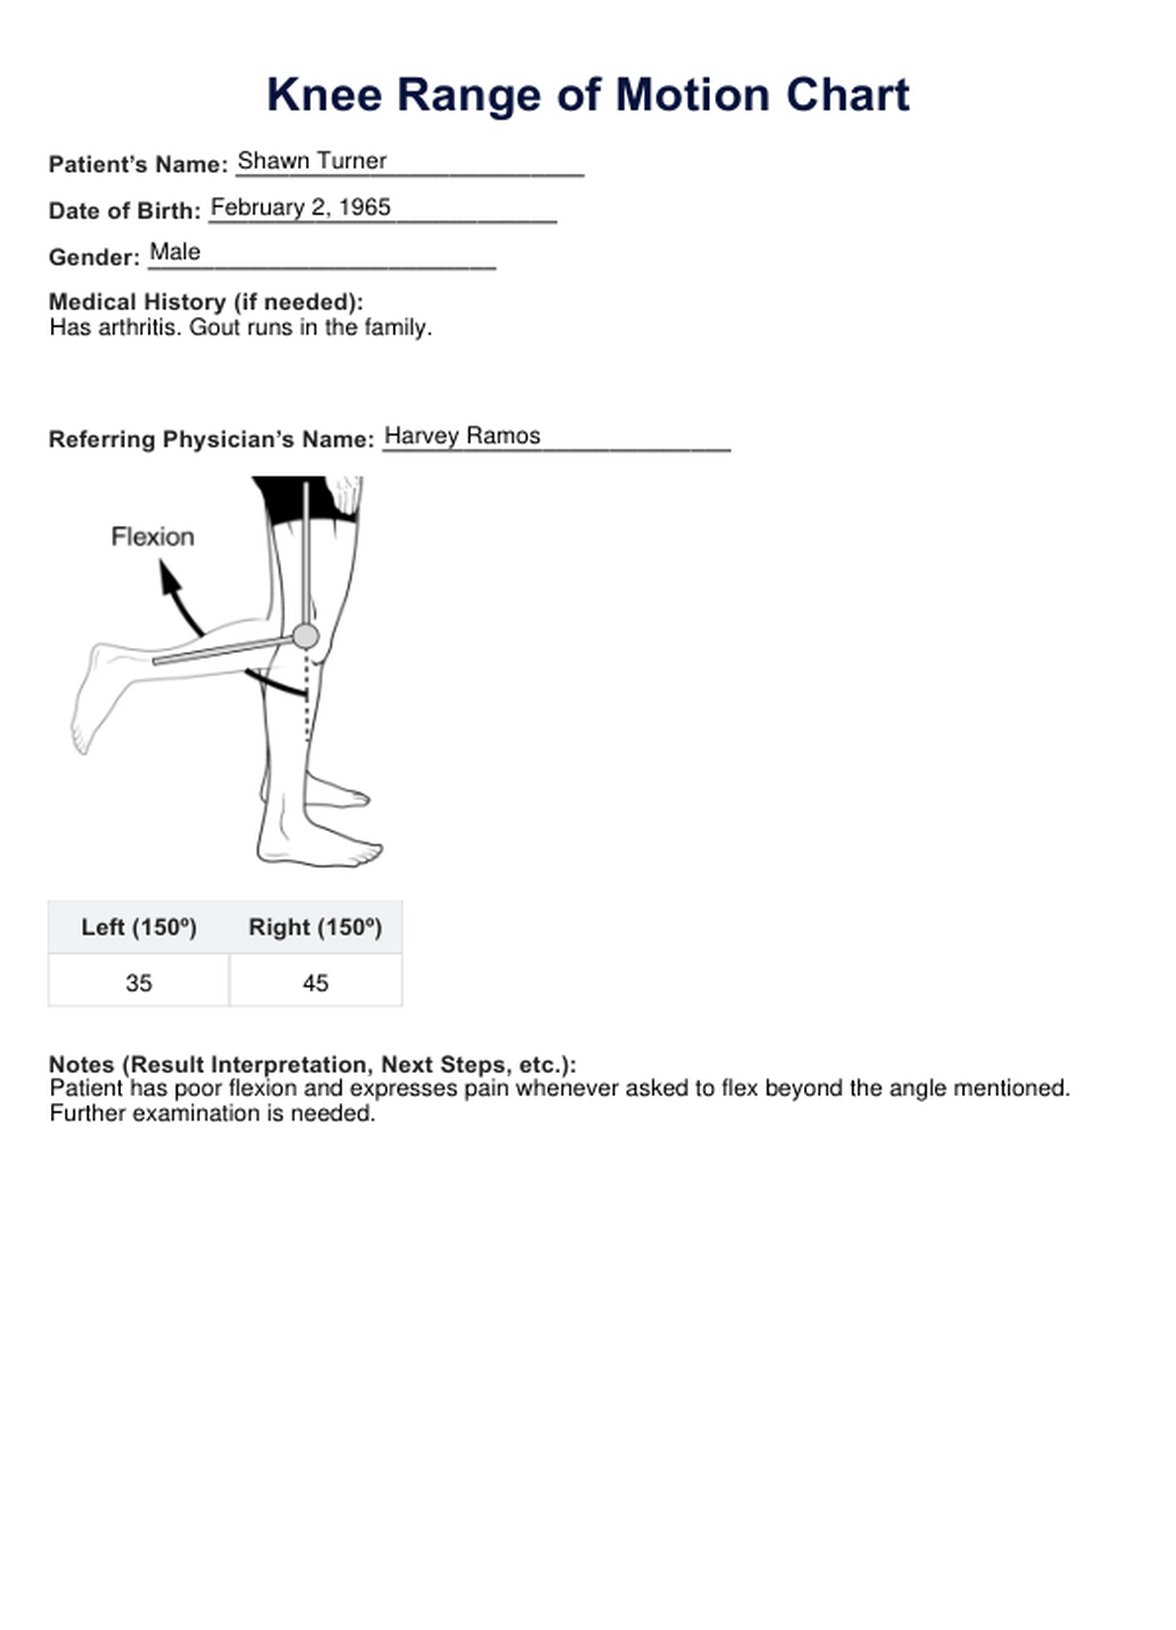 Knee Range of Motion Chart PDF Example